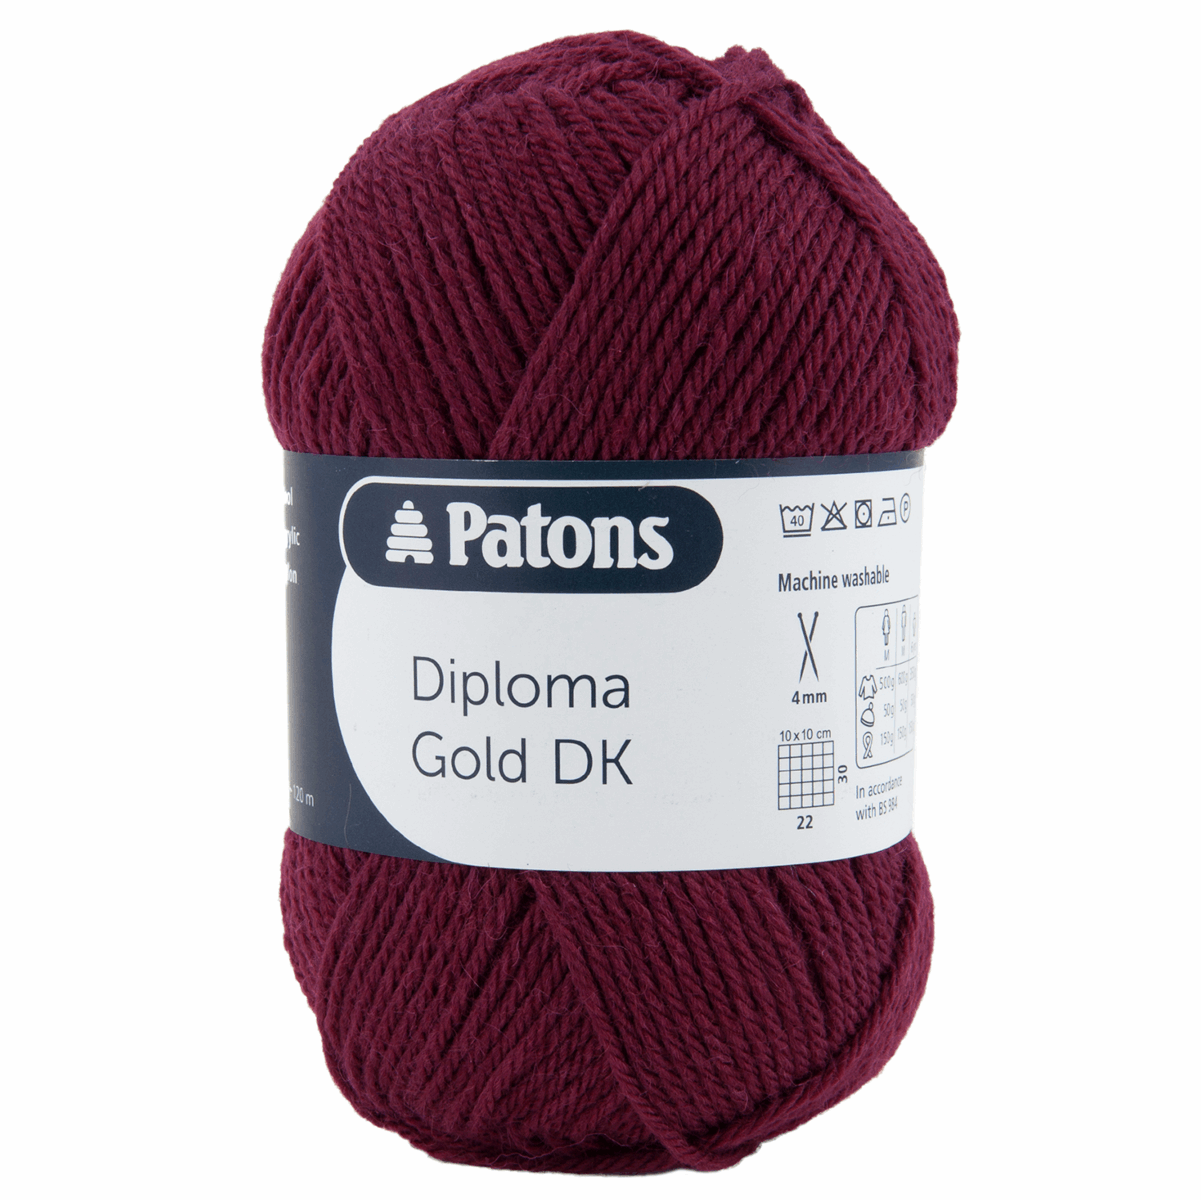 Patons Diploma Gold DK (50g). Choose colour.